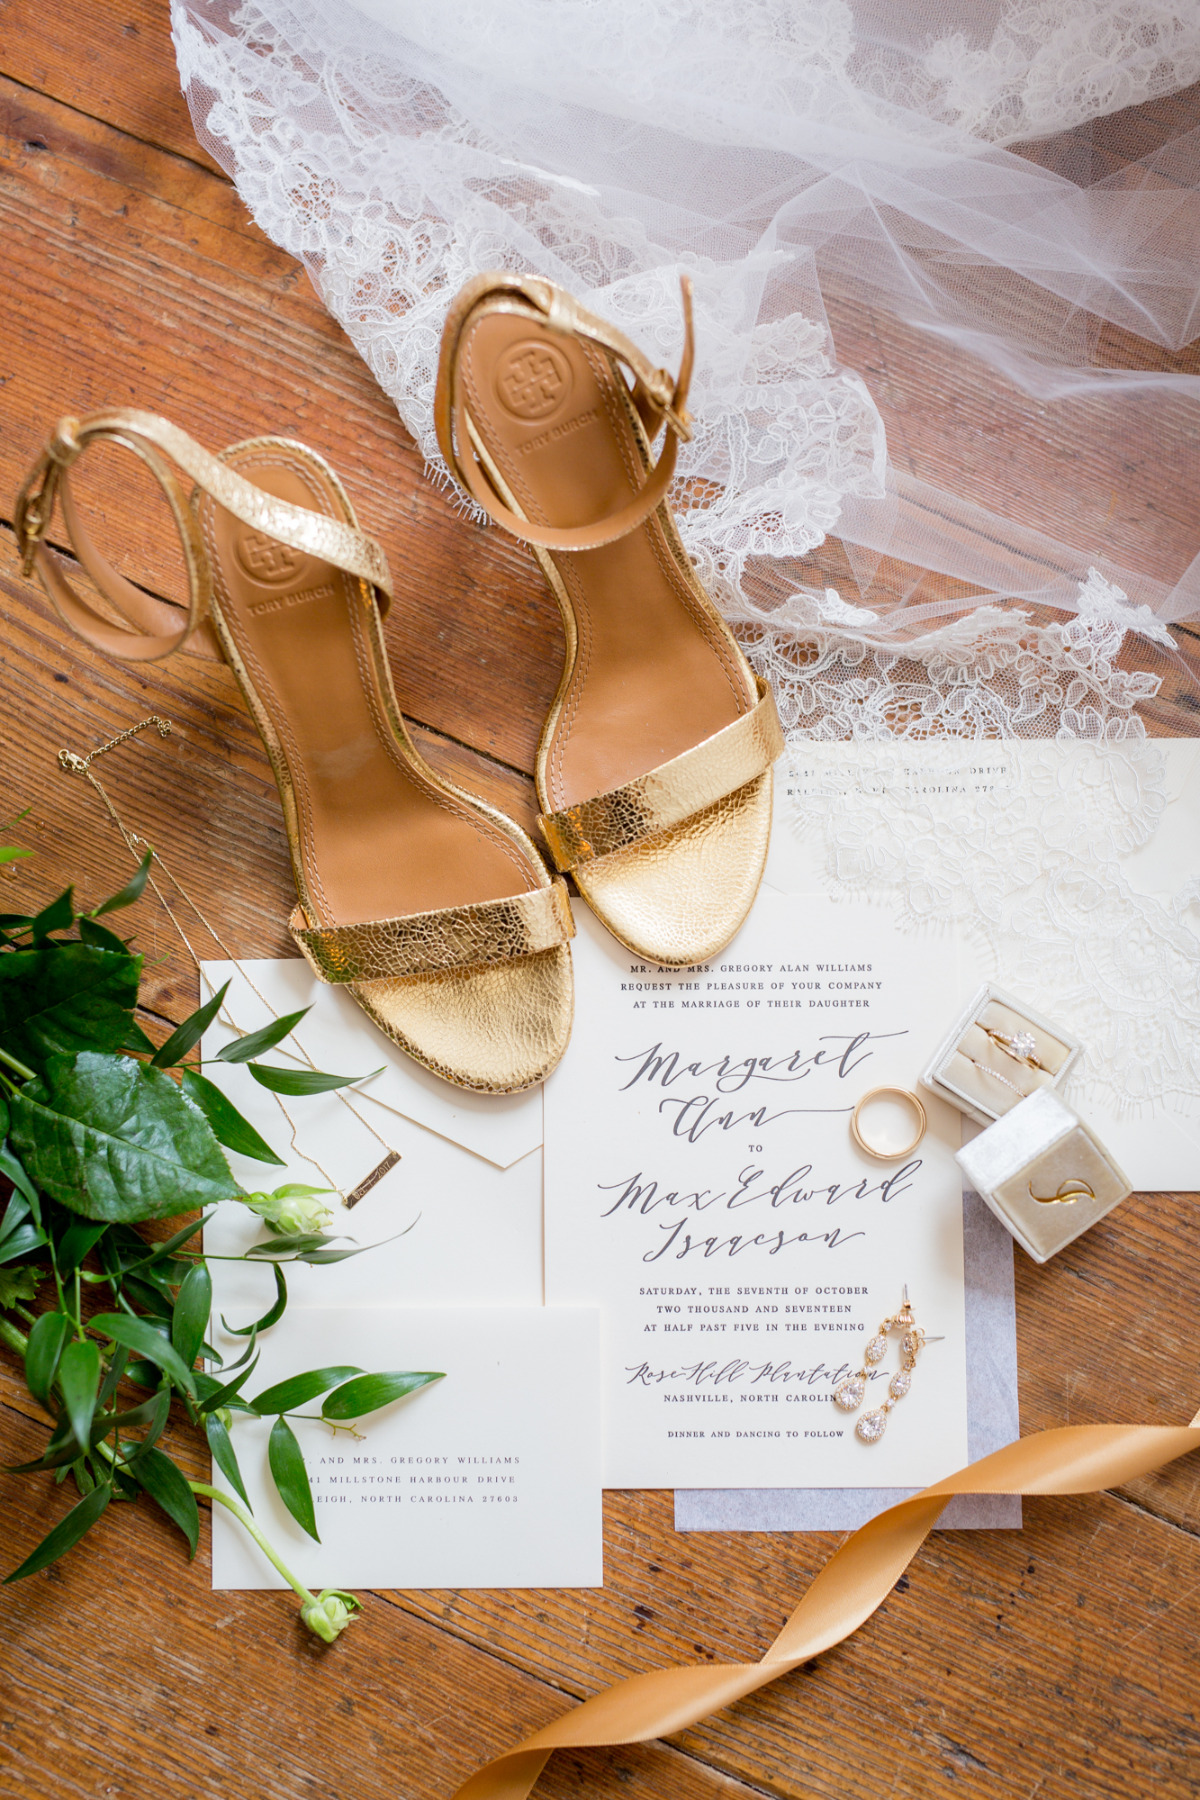 Gold wedding heels by Tory Burch